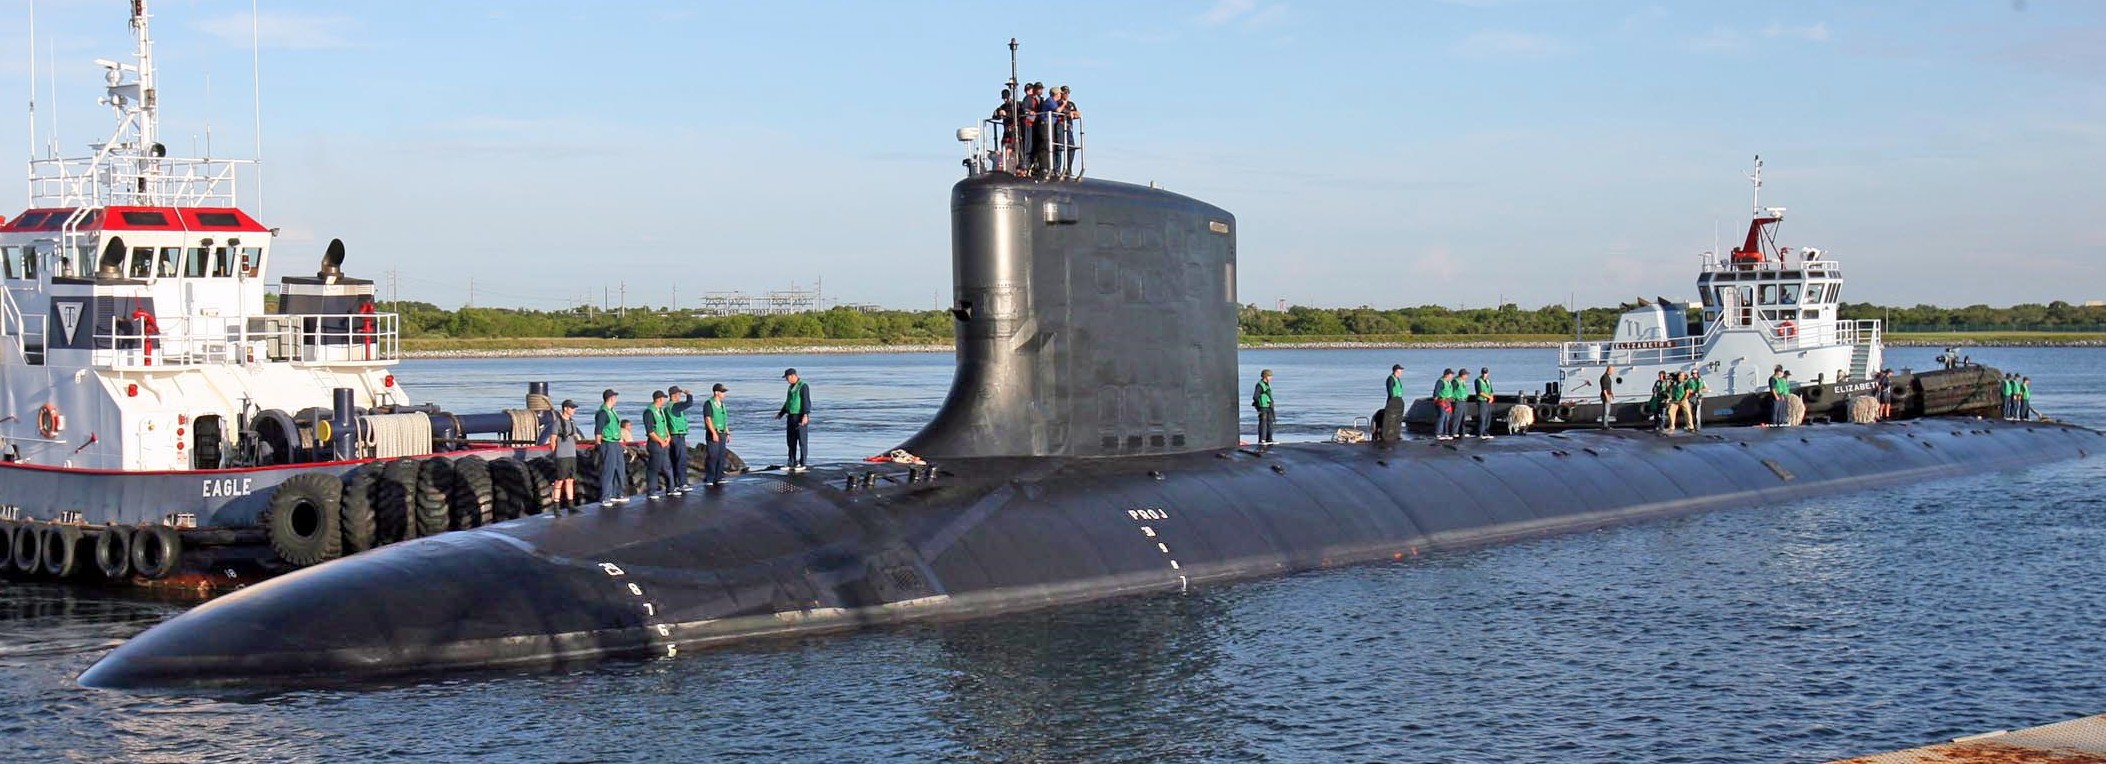 uss texas ssn-775 virginia class attack submarine navy newport news shipbuilding joint base pearl harbor hickam hawaii